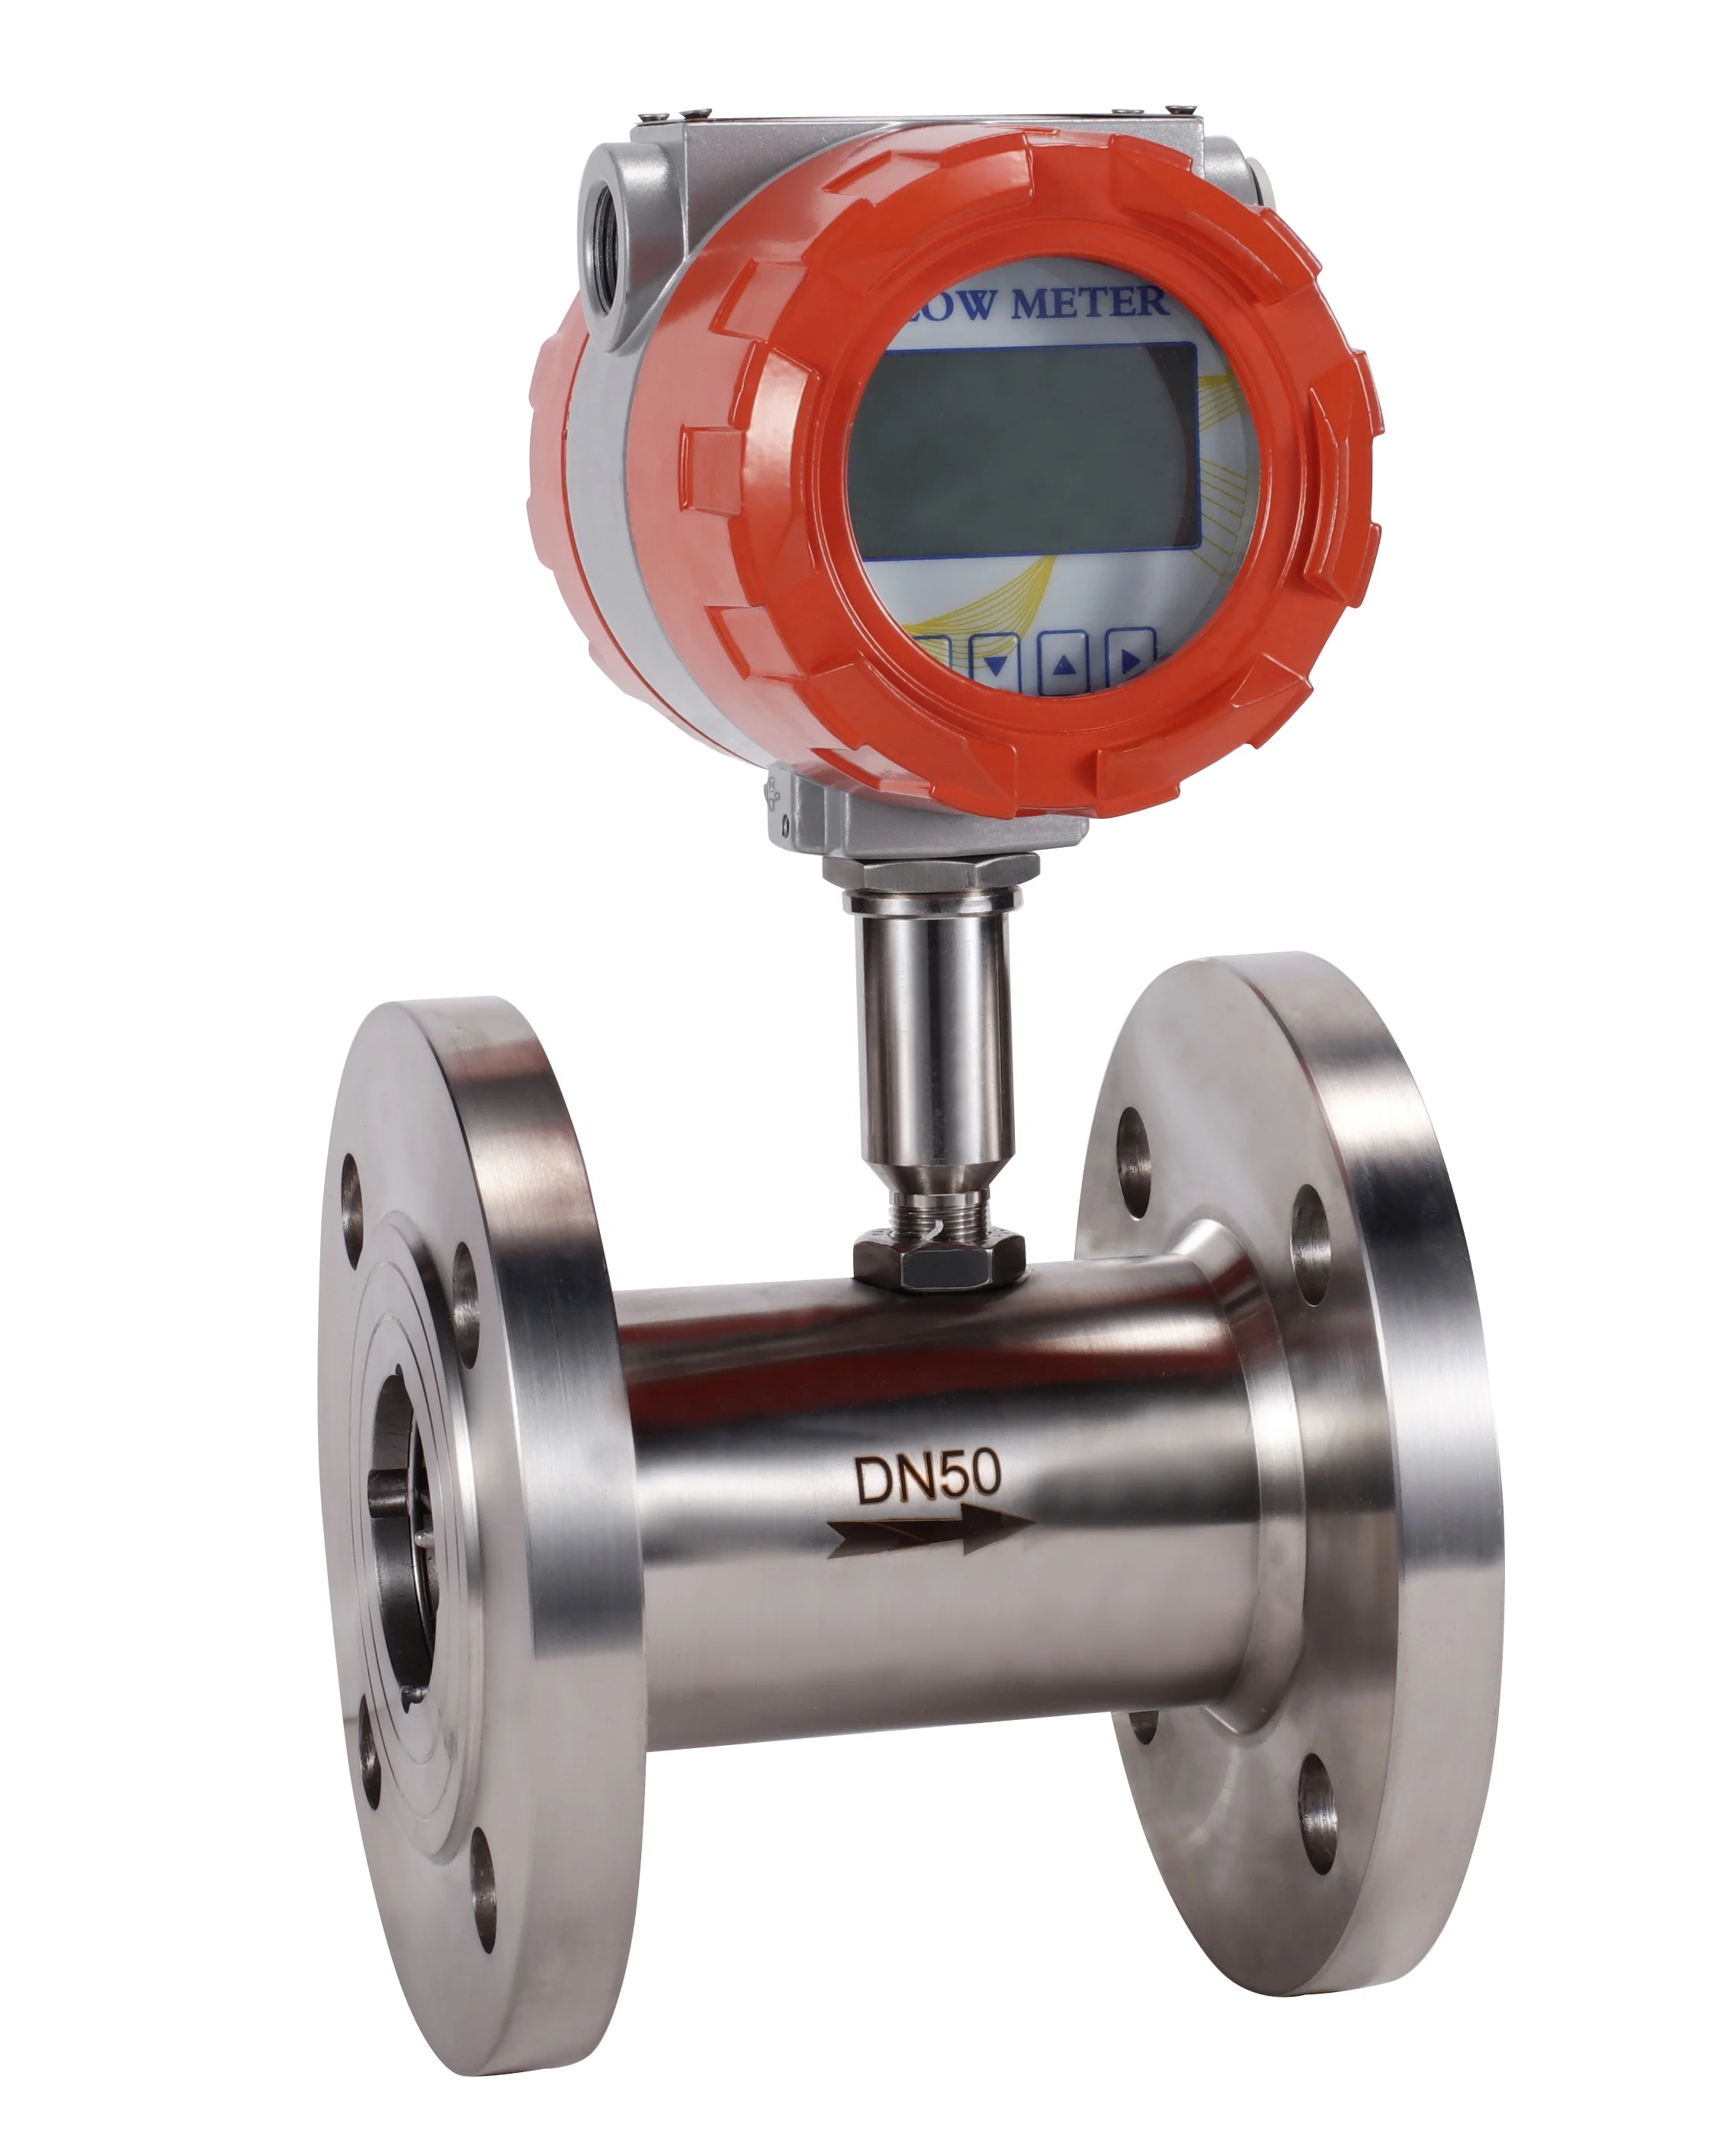 

DN6 liquid turbine flowmeter for Water and Oil turbine diese fuel meter flowmeter Pulse type with senso